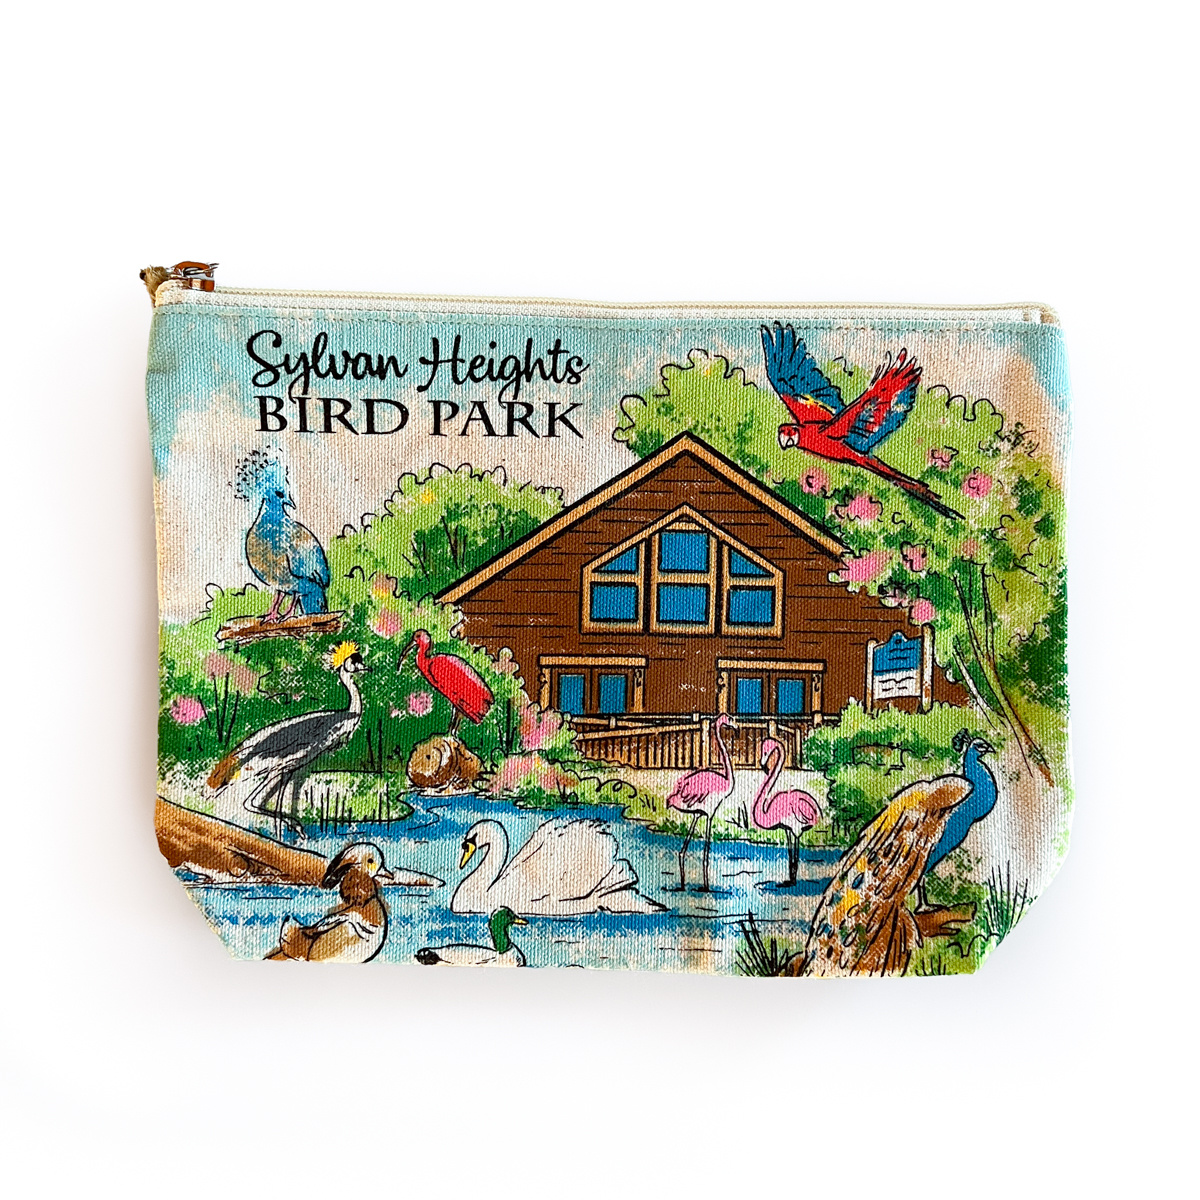 Sylvan Heights Bird Stickers - Sylvan Heights Bird Park Shop